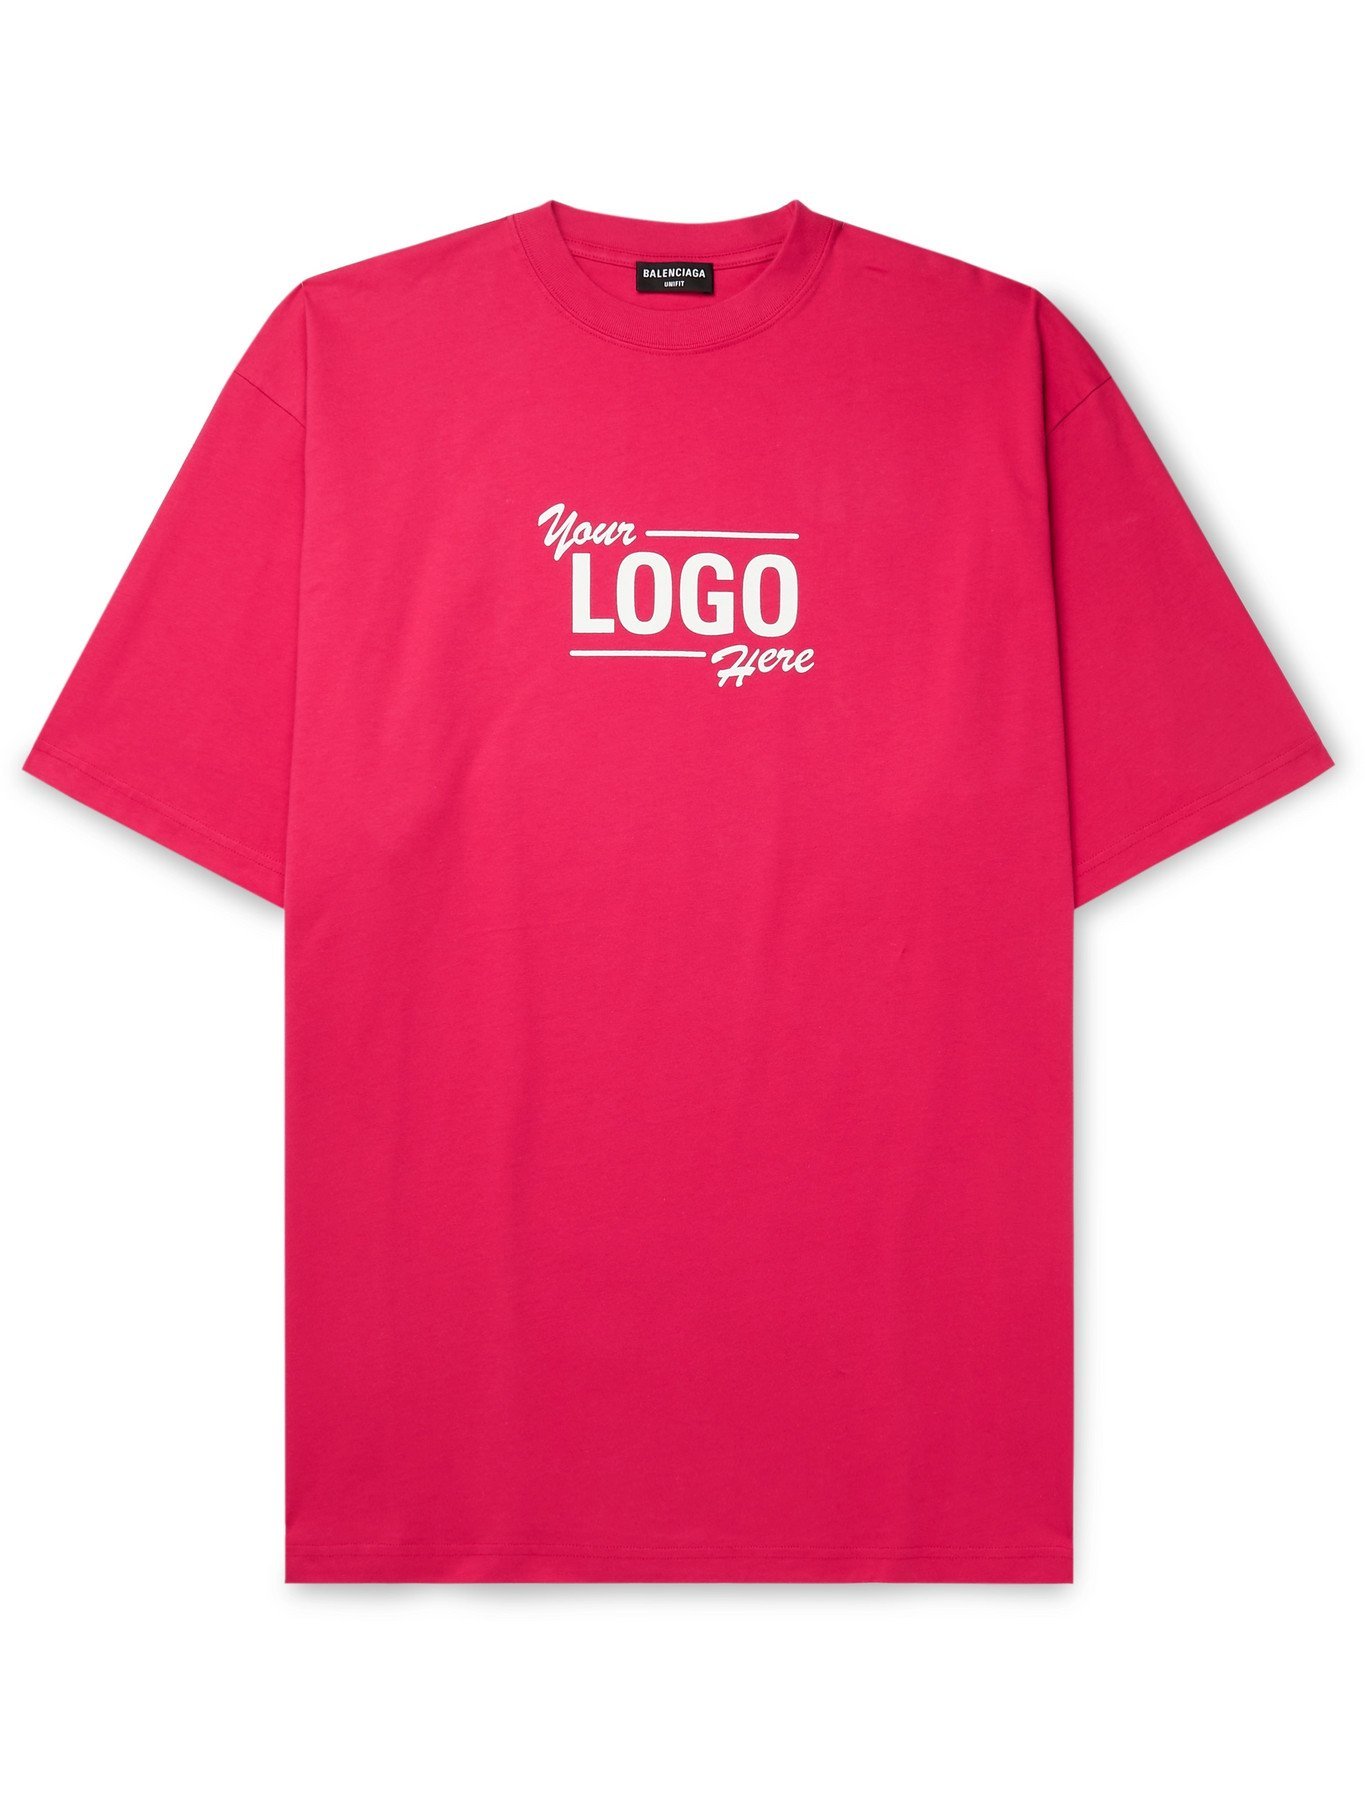 BALENCIAGA - Oversized Printed Cotton-Jersey T-Shirt - Pink Balenciaga